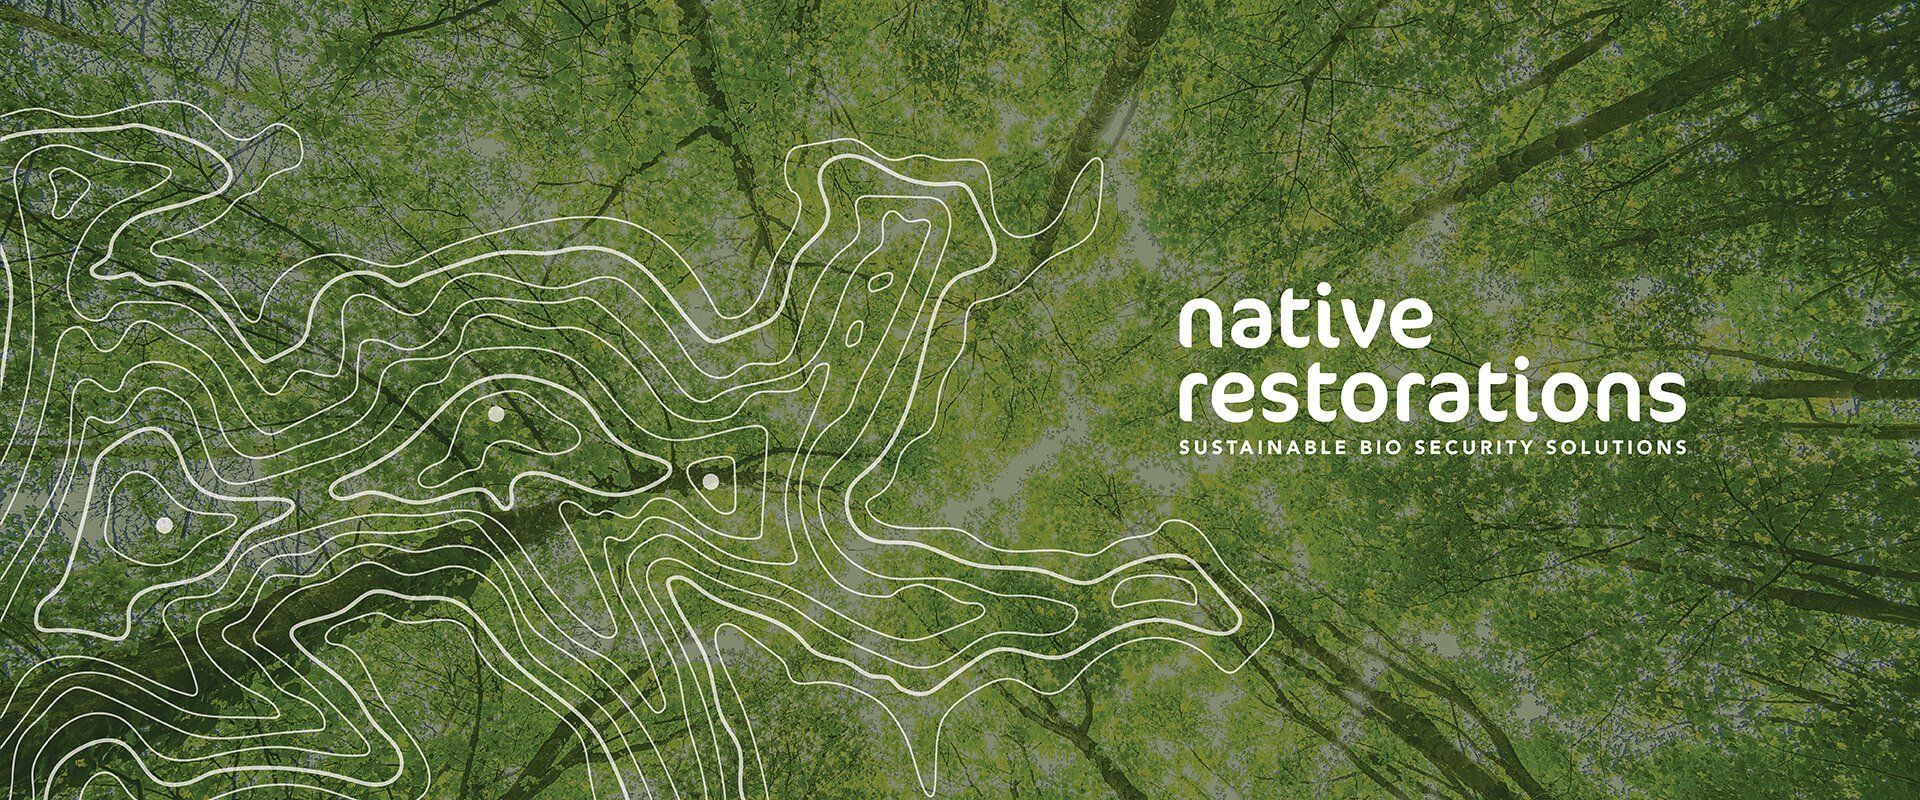 Native Restorations branding by Vanilla Hayes Ltd in Blenheim, New Zealand